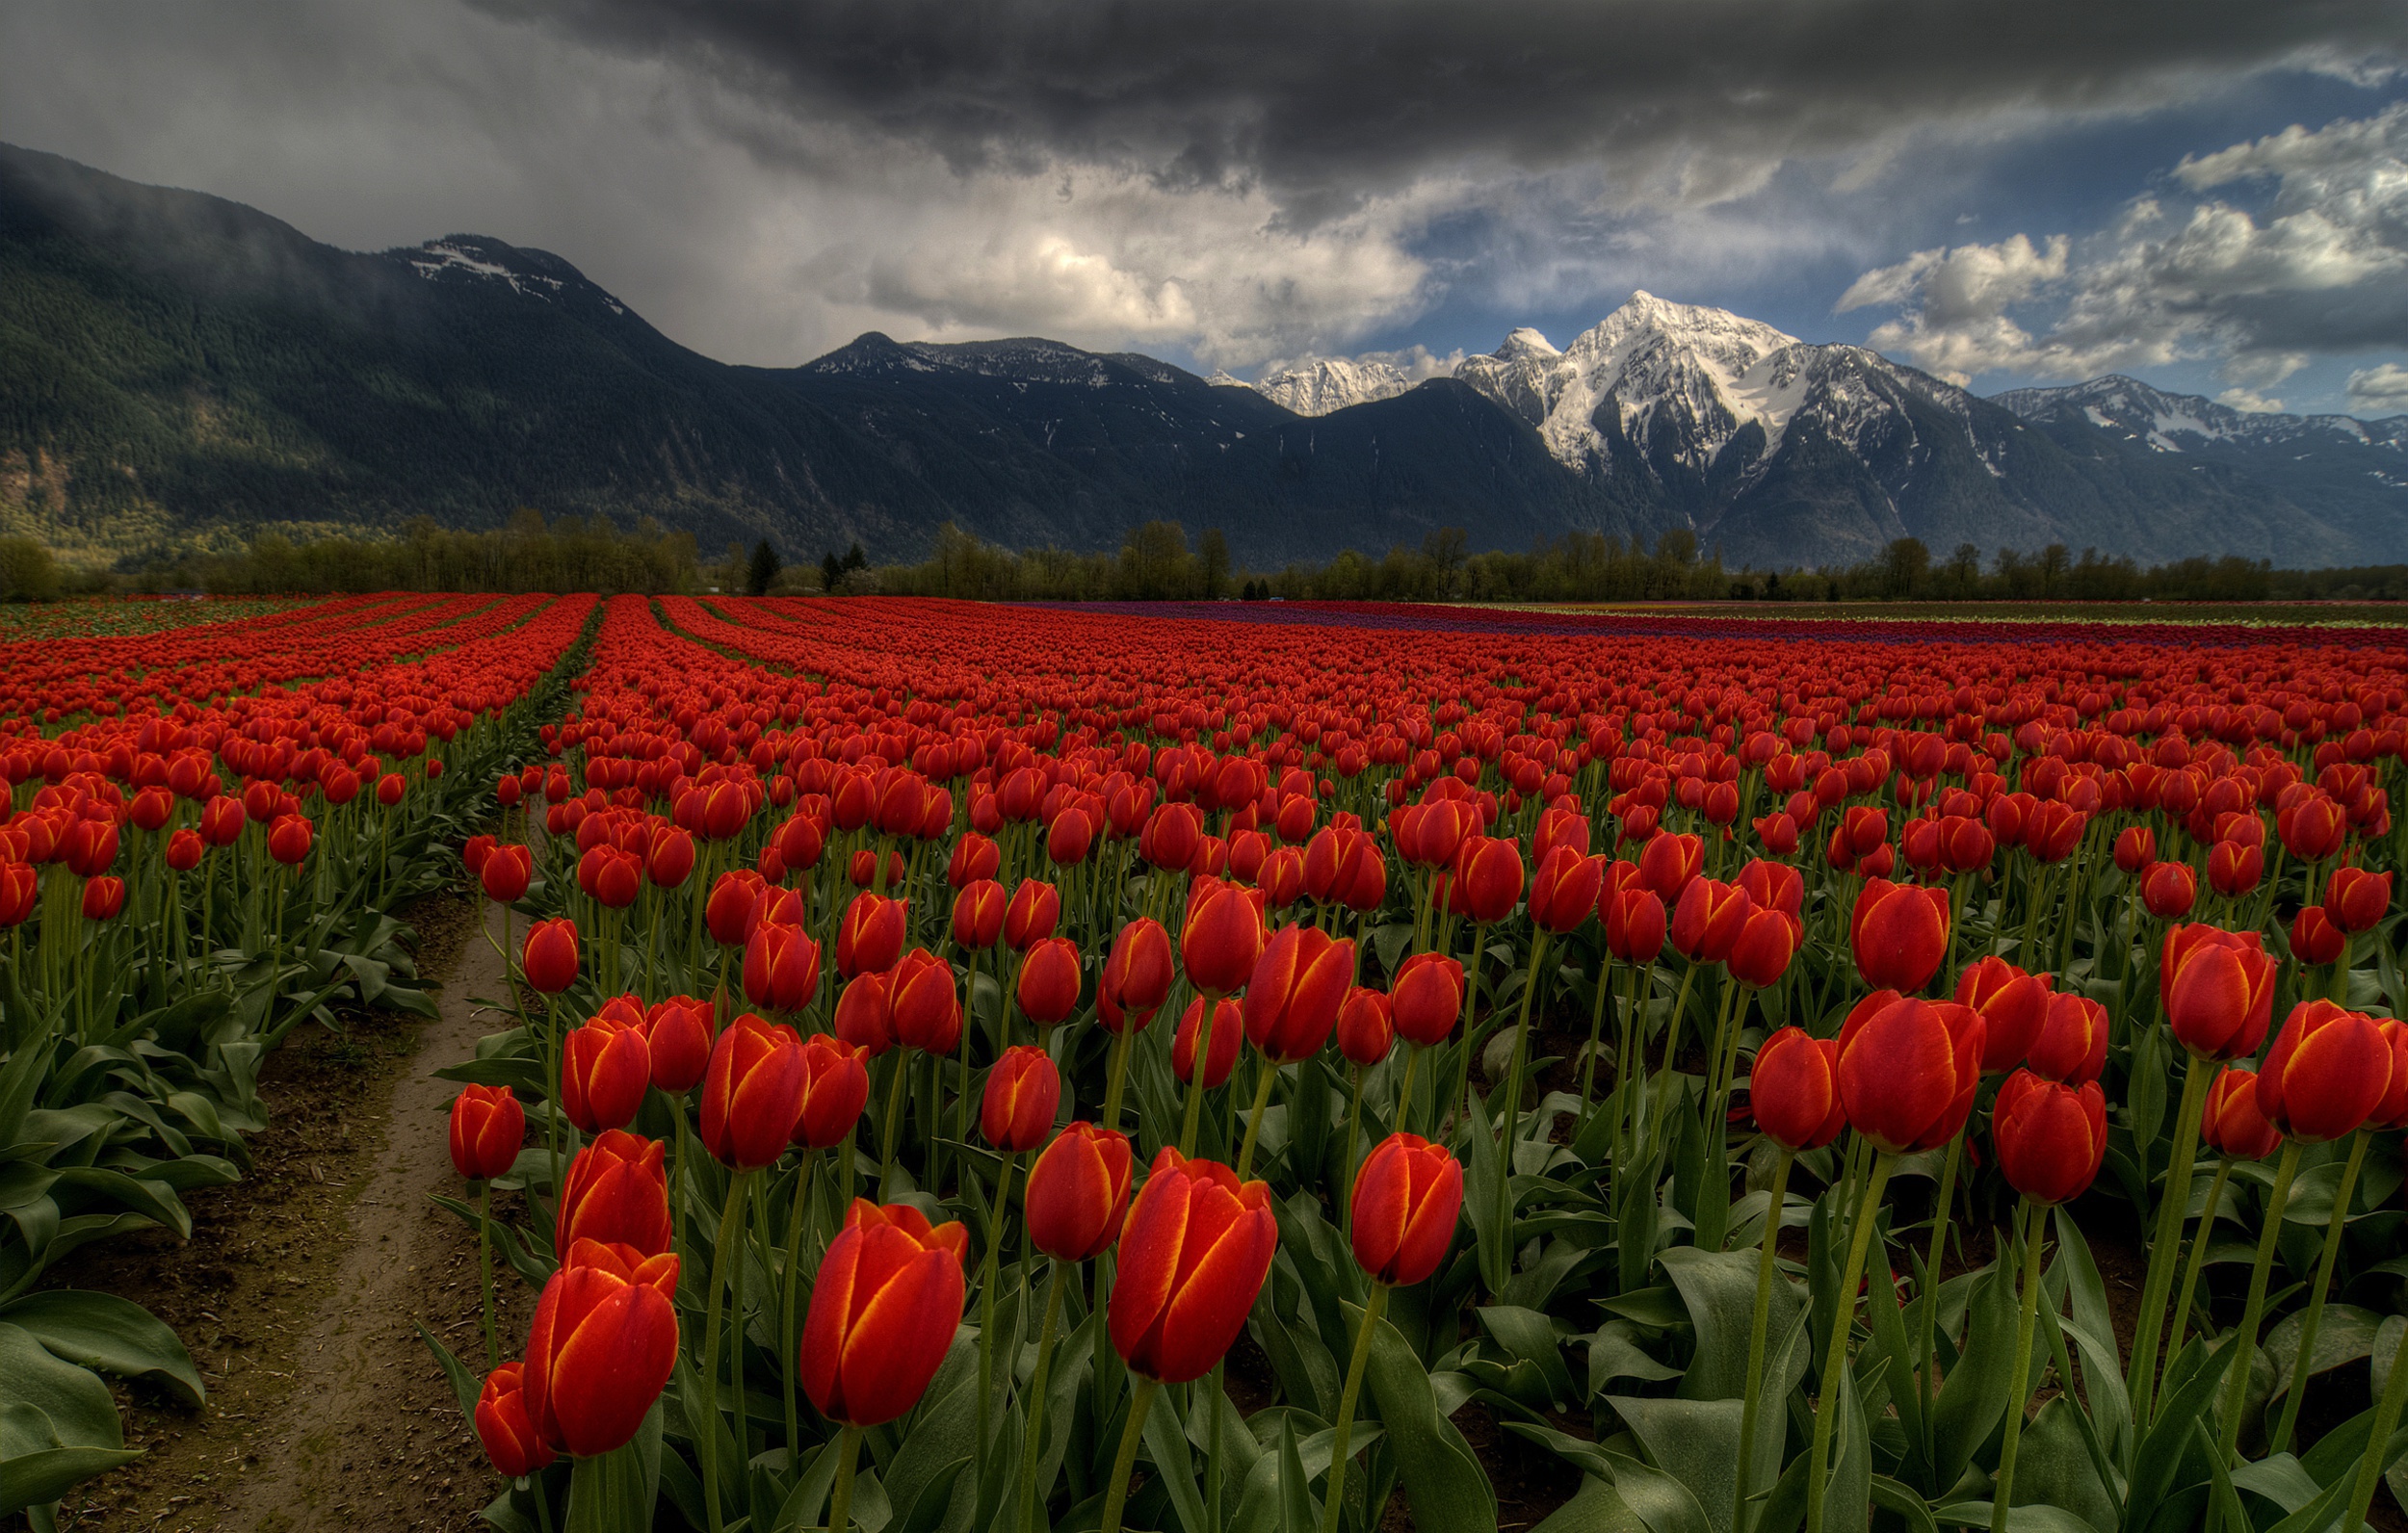 Outdoors Landscape Flowers Plants Agro Plants Tulips Red Flowers Mountains Snowy Peak Field 2500x1592